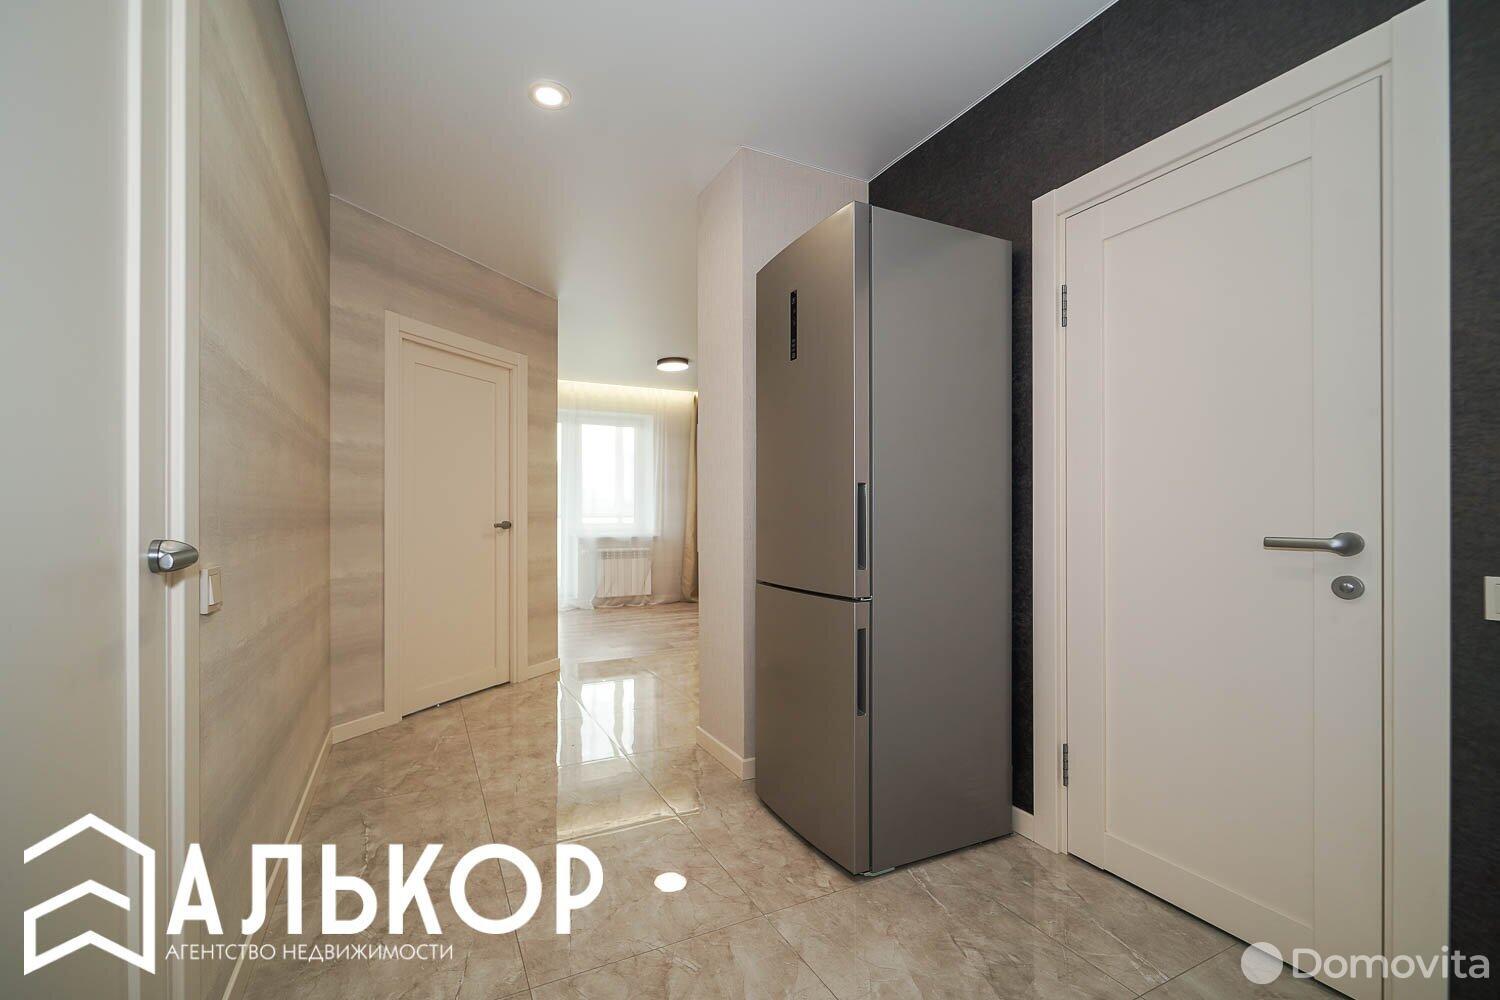 квартира, Минск, ул. Олешева, д. 5, стоимость продажи 272 765 р.